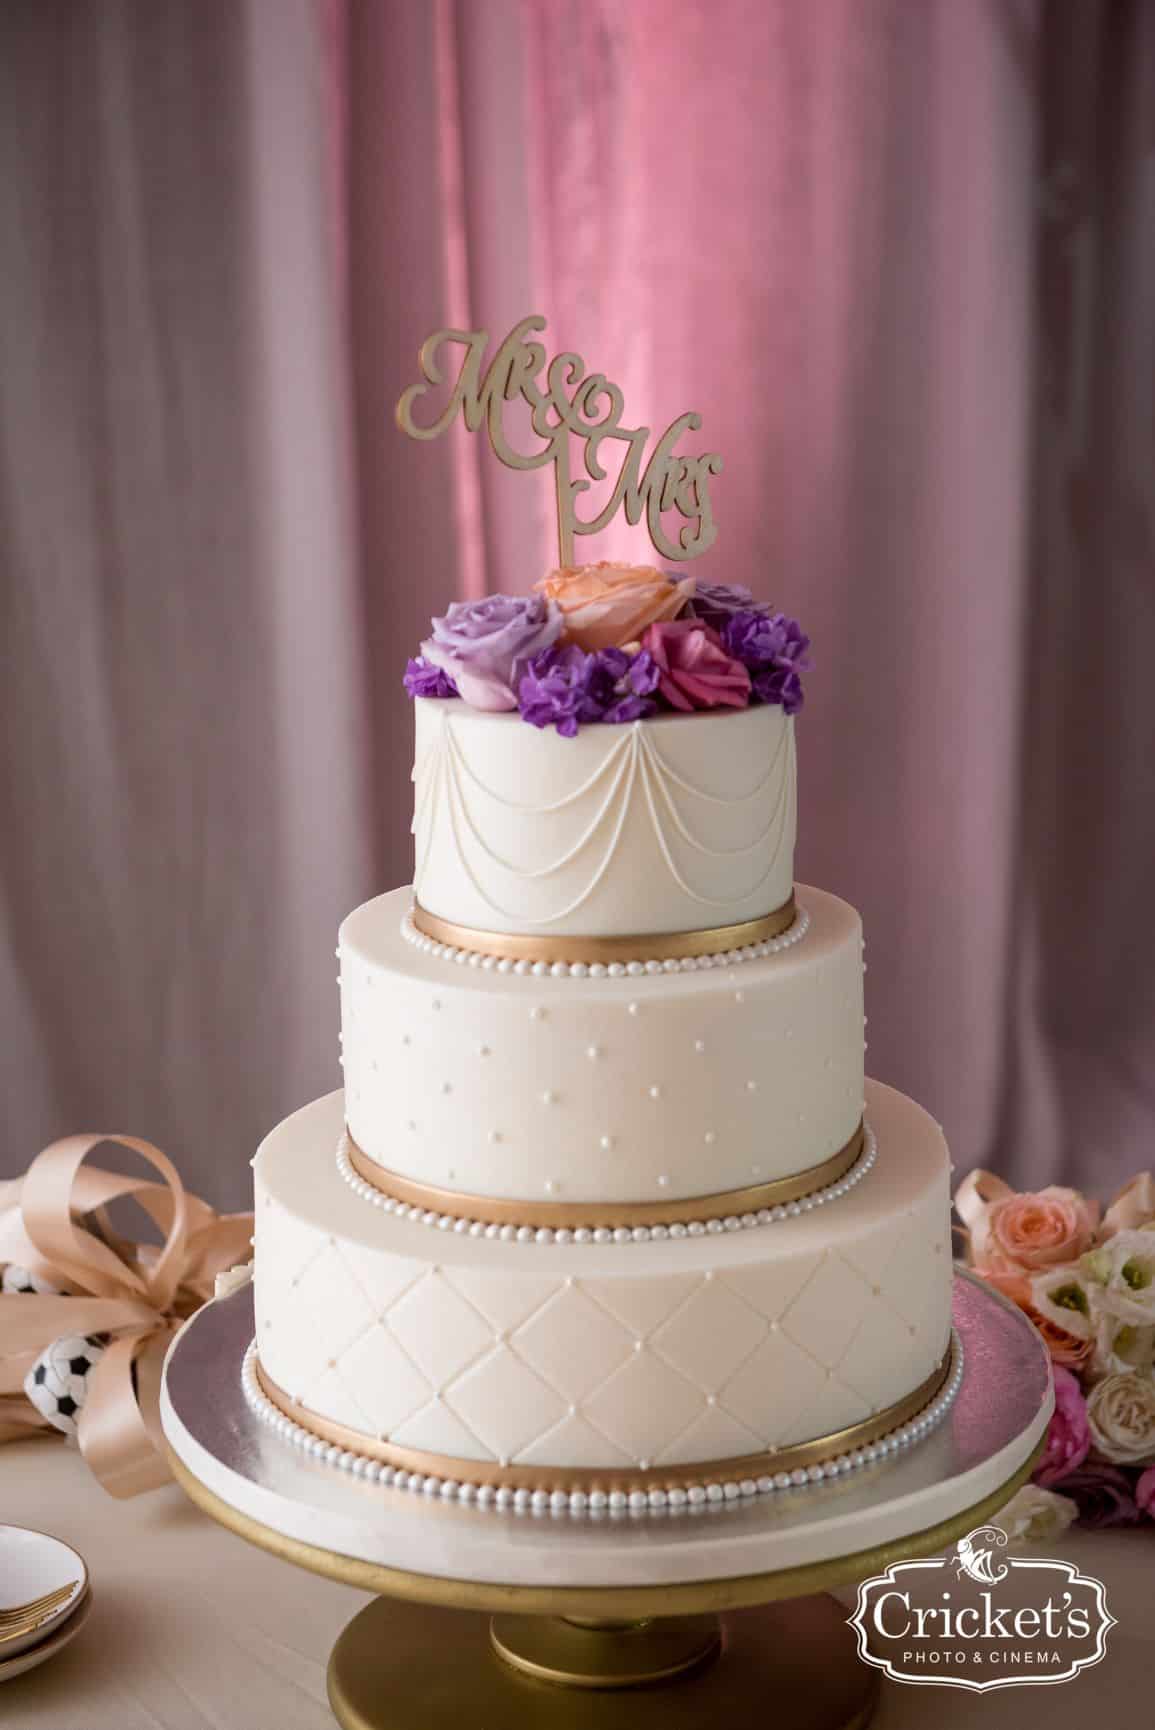 Summer Wedding Cake - Just Marry Weddings - Cricket's Photography